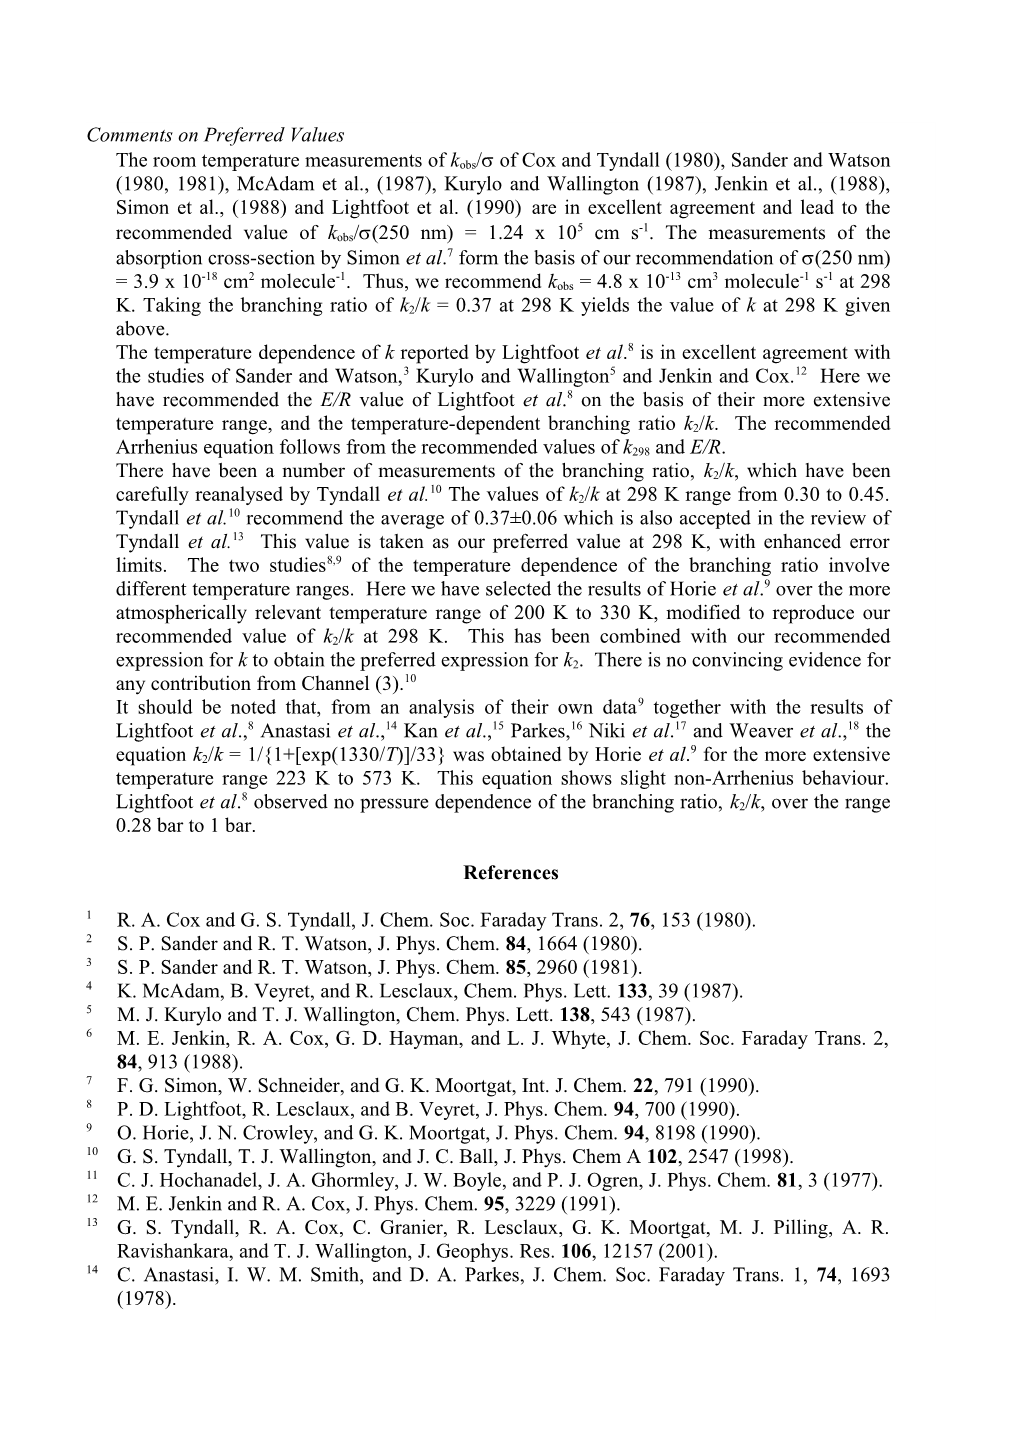 IUPAC Task Group on Atmospheric Chemical Kinetic Data Evaluation Data Sheet ROO 22